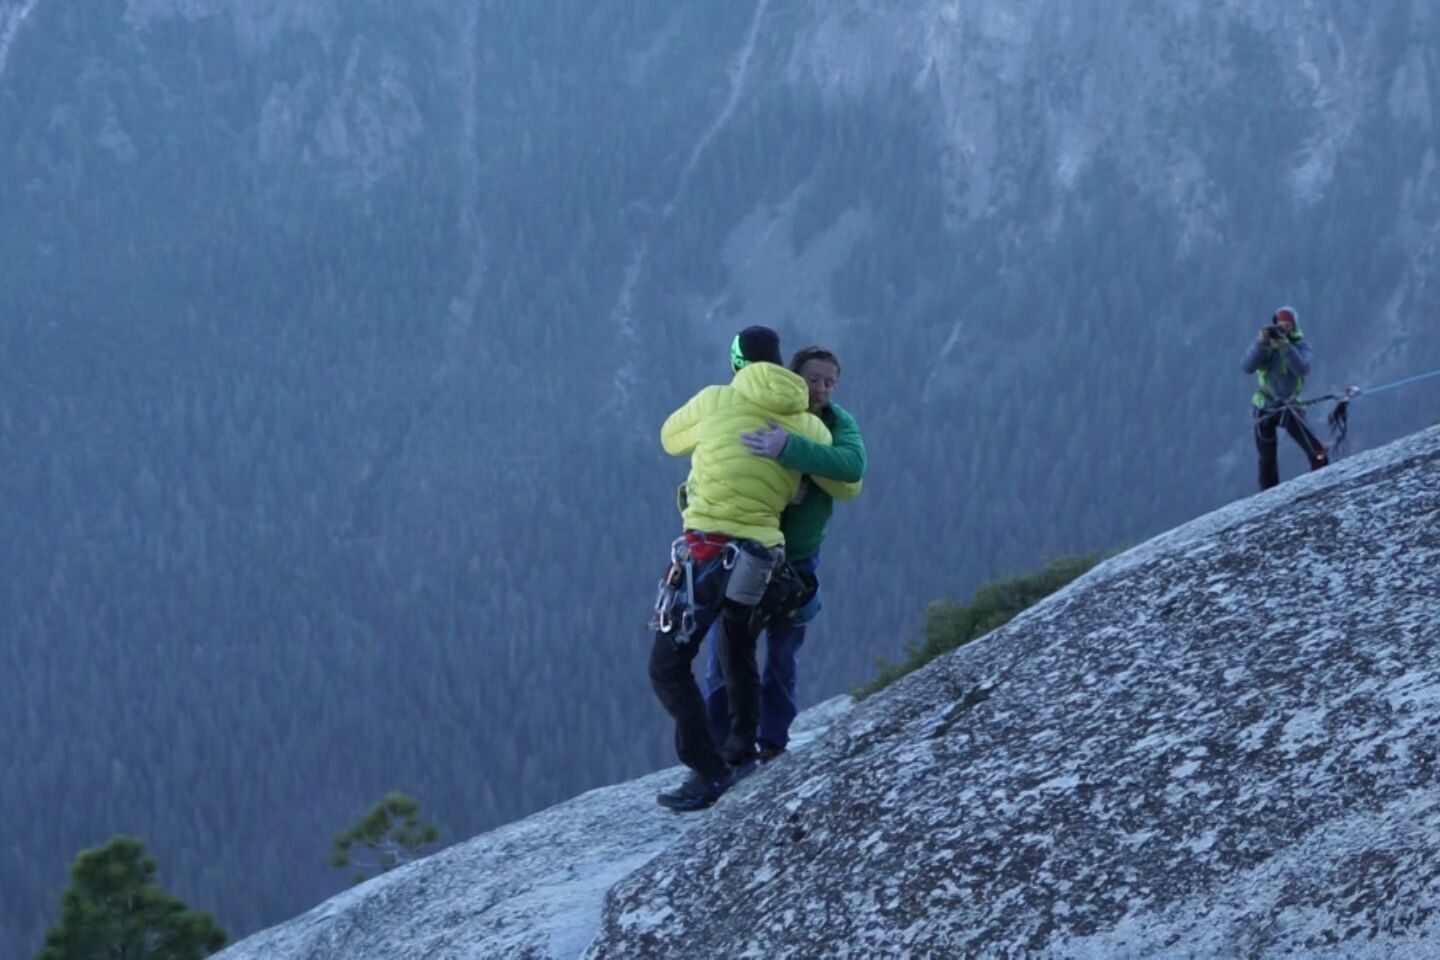 Hug at the summit